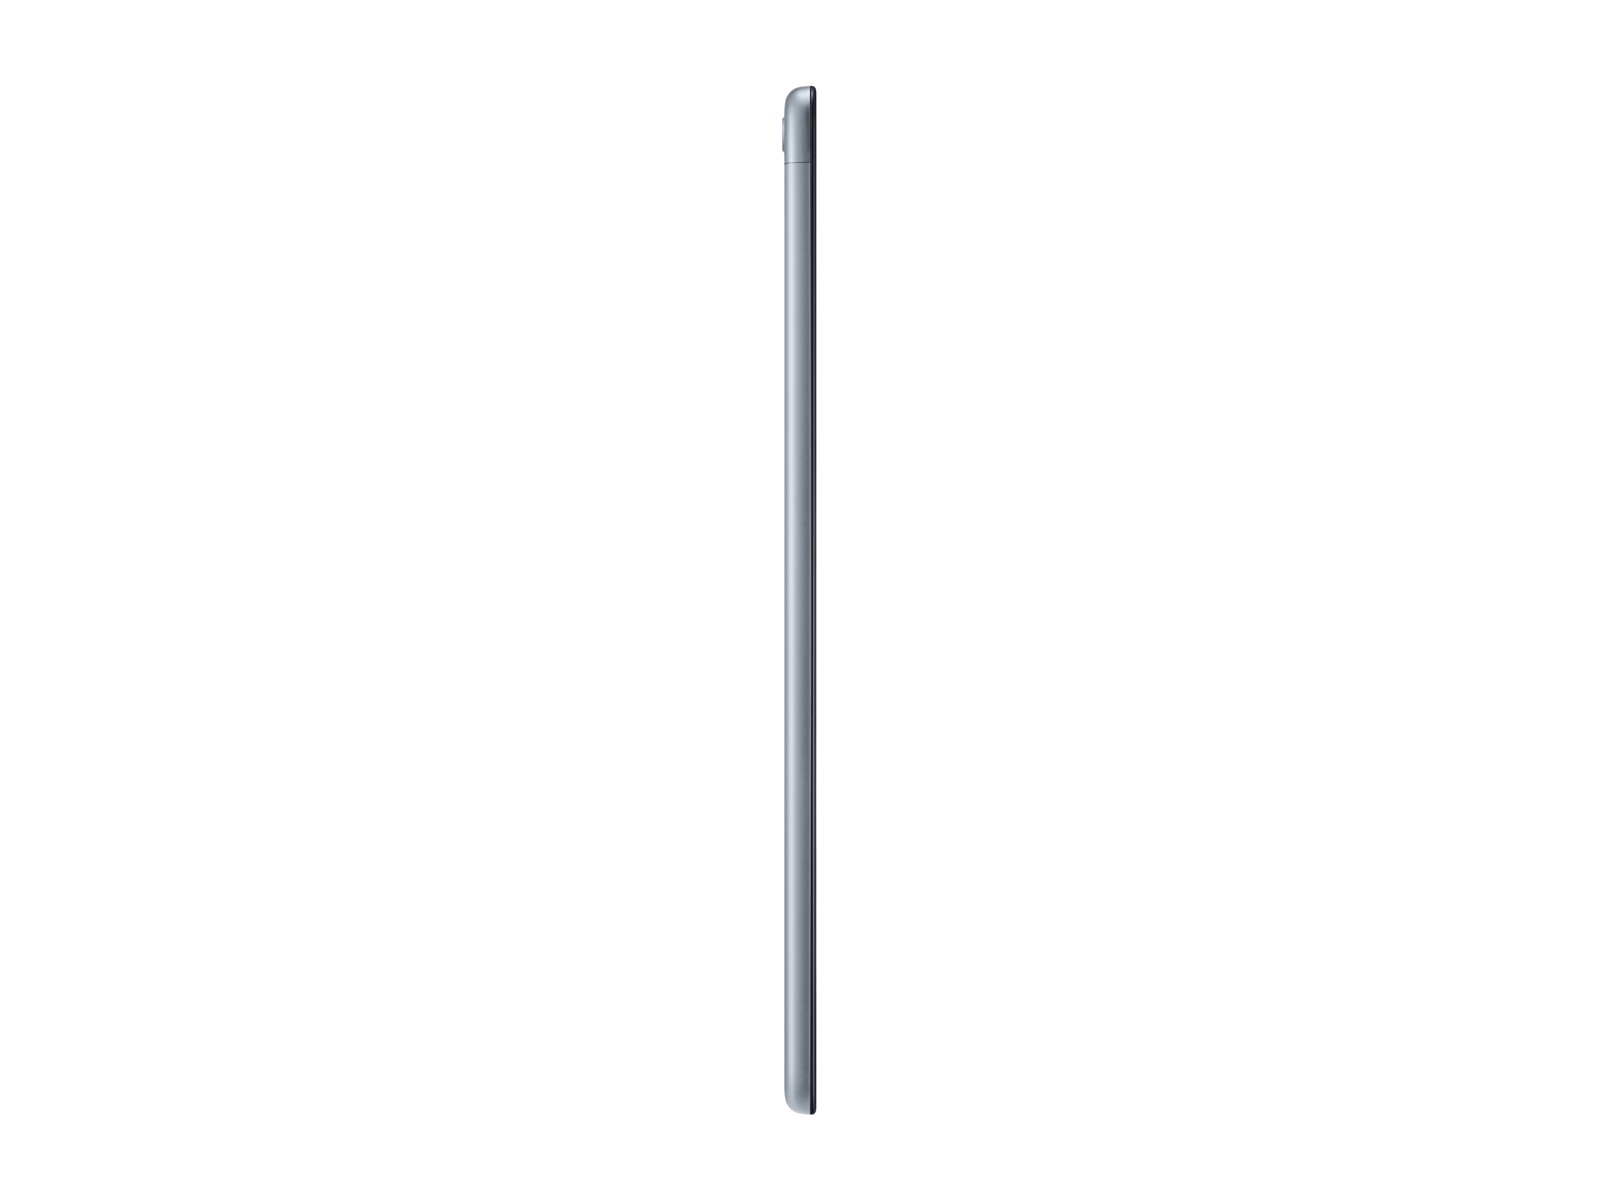 Thumbnail image of Galaxy Tab A 10.1 (2019), 128GB, Silver (Wi-Fi)